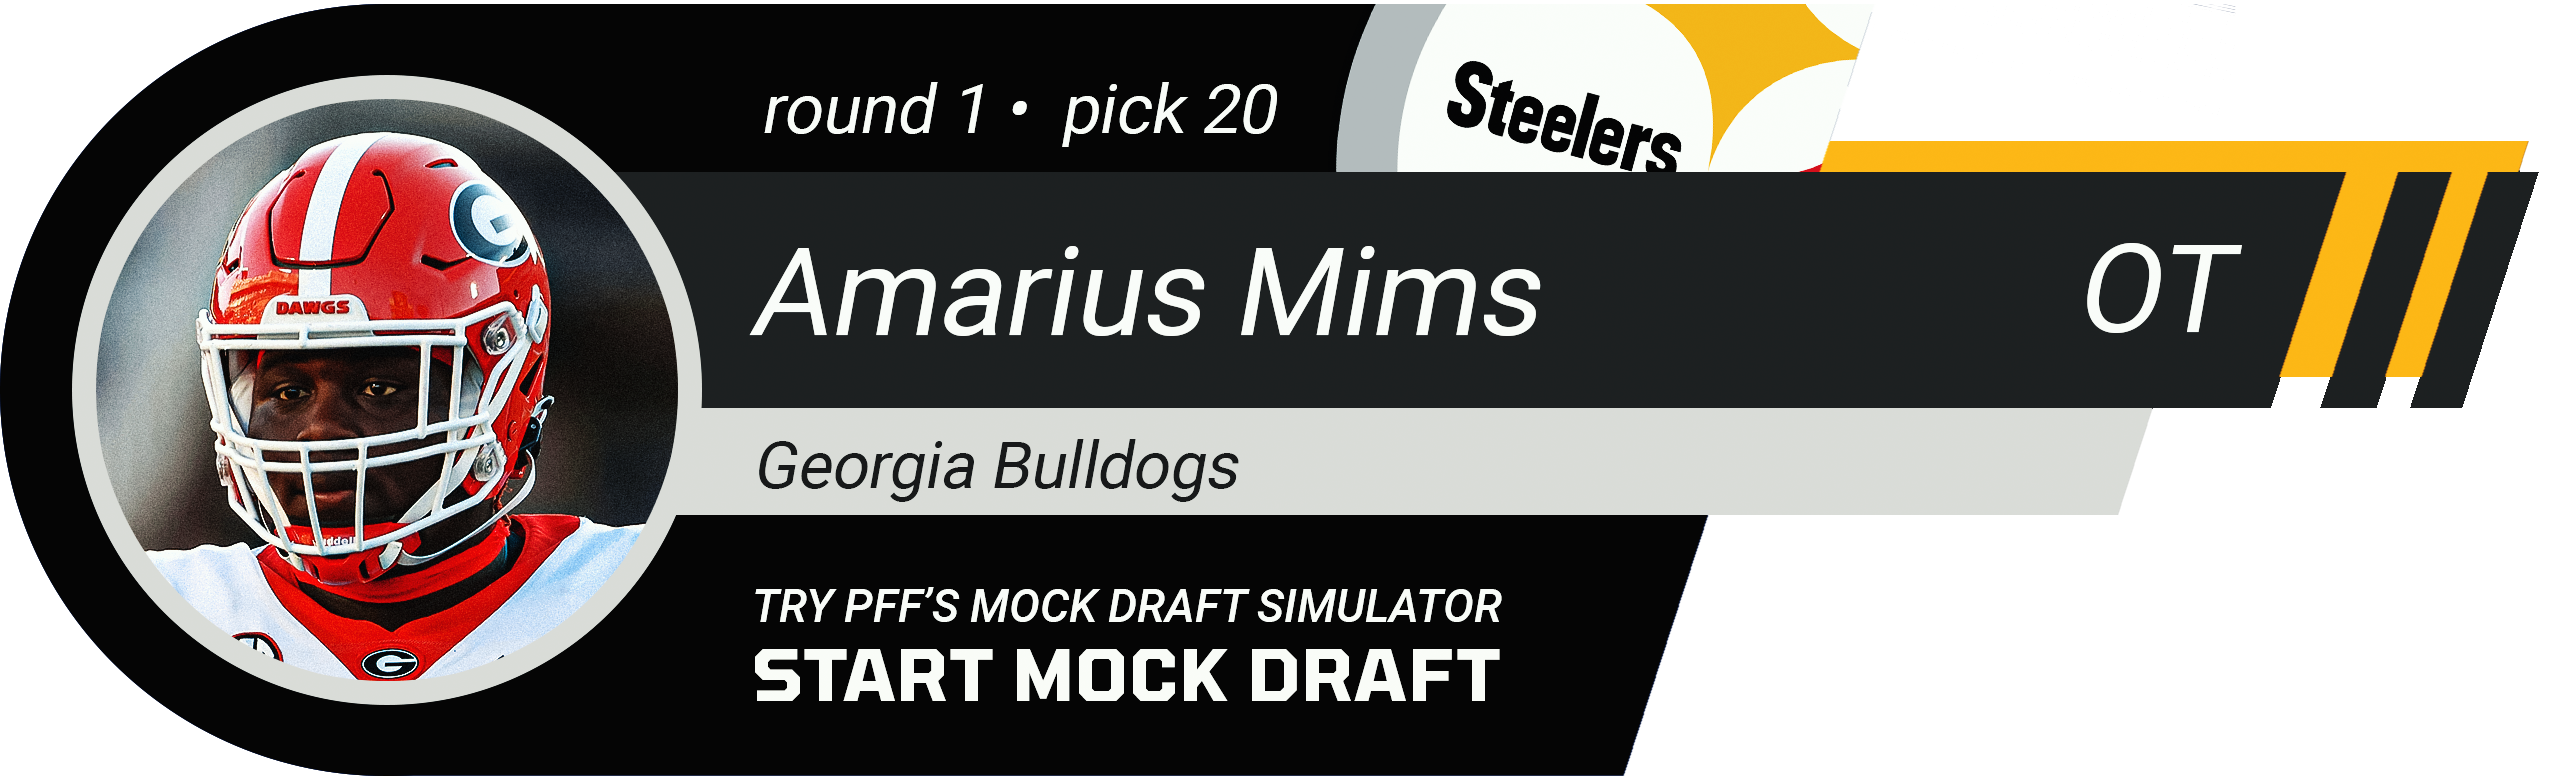 20. Pittsburgh Steelers: T Amarius Mims, Georgia